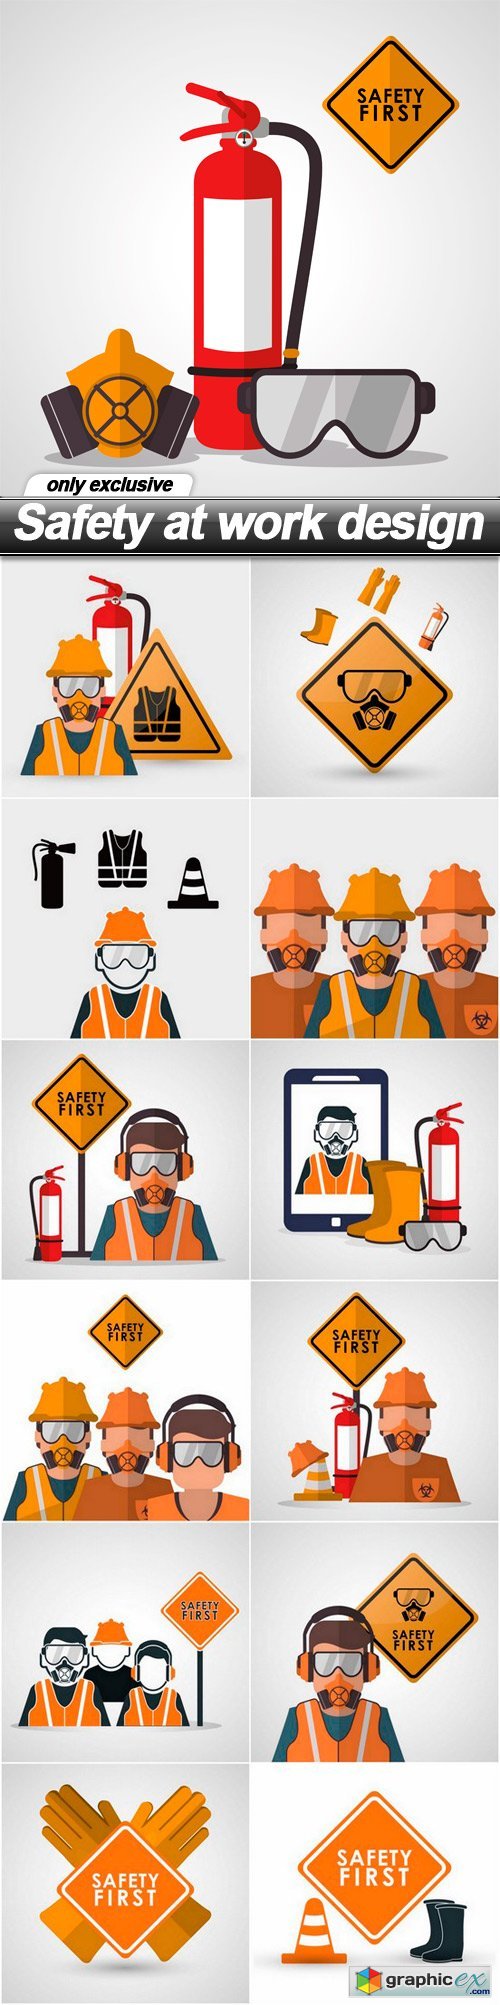 Safety at work design - 13 EPS